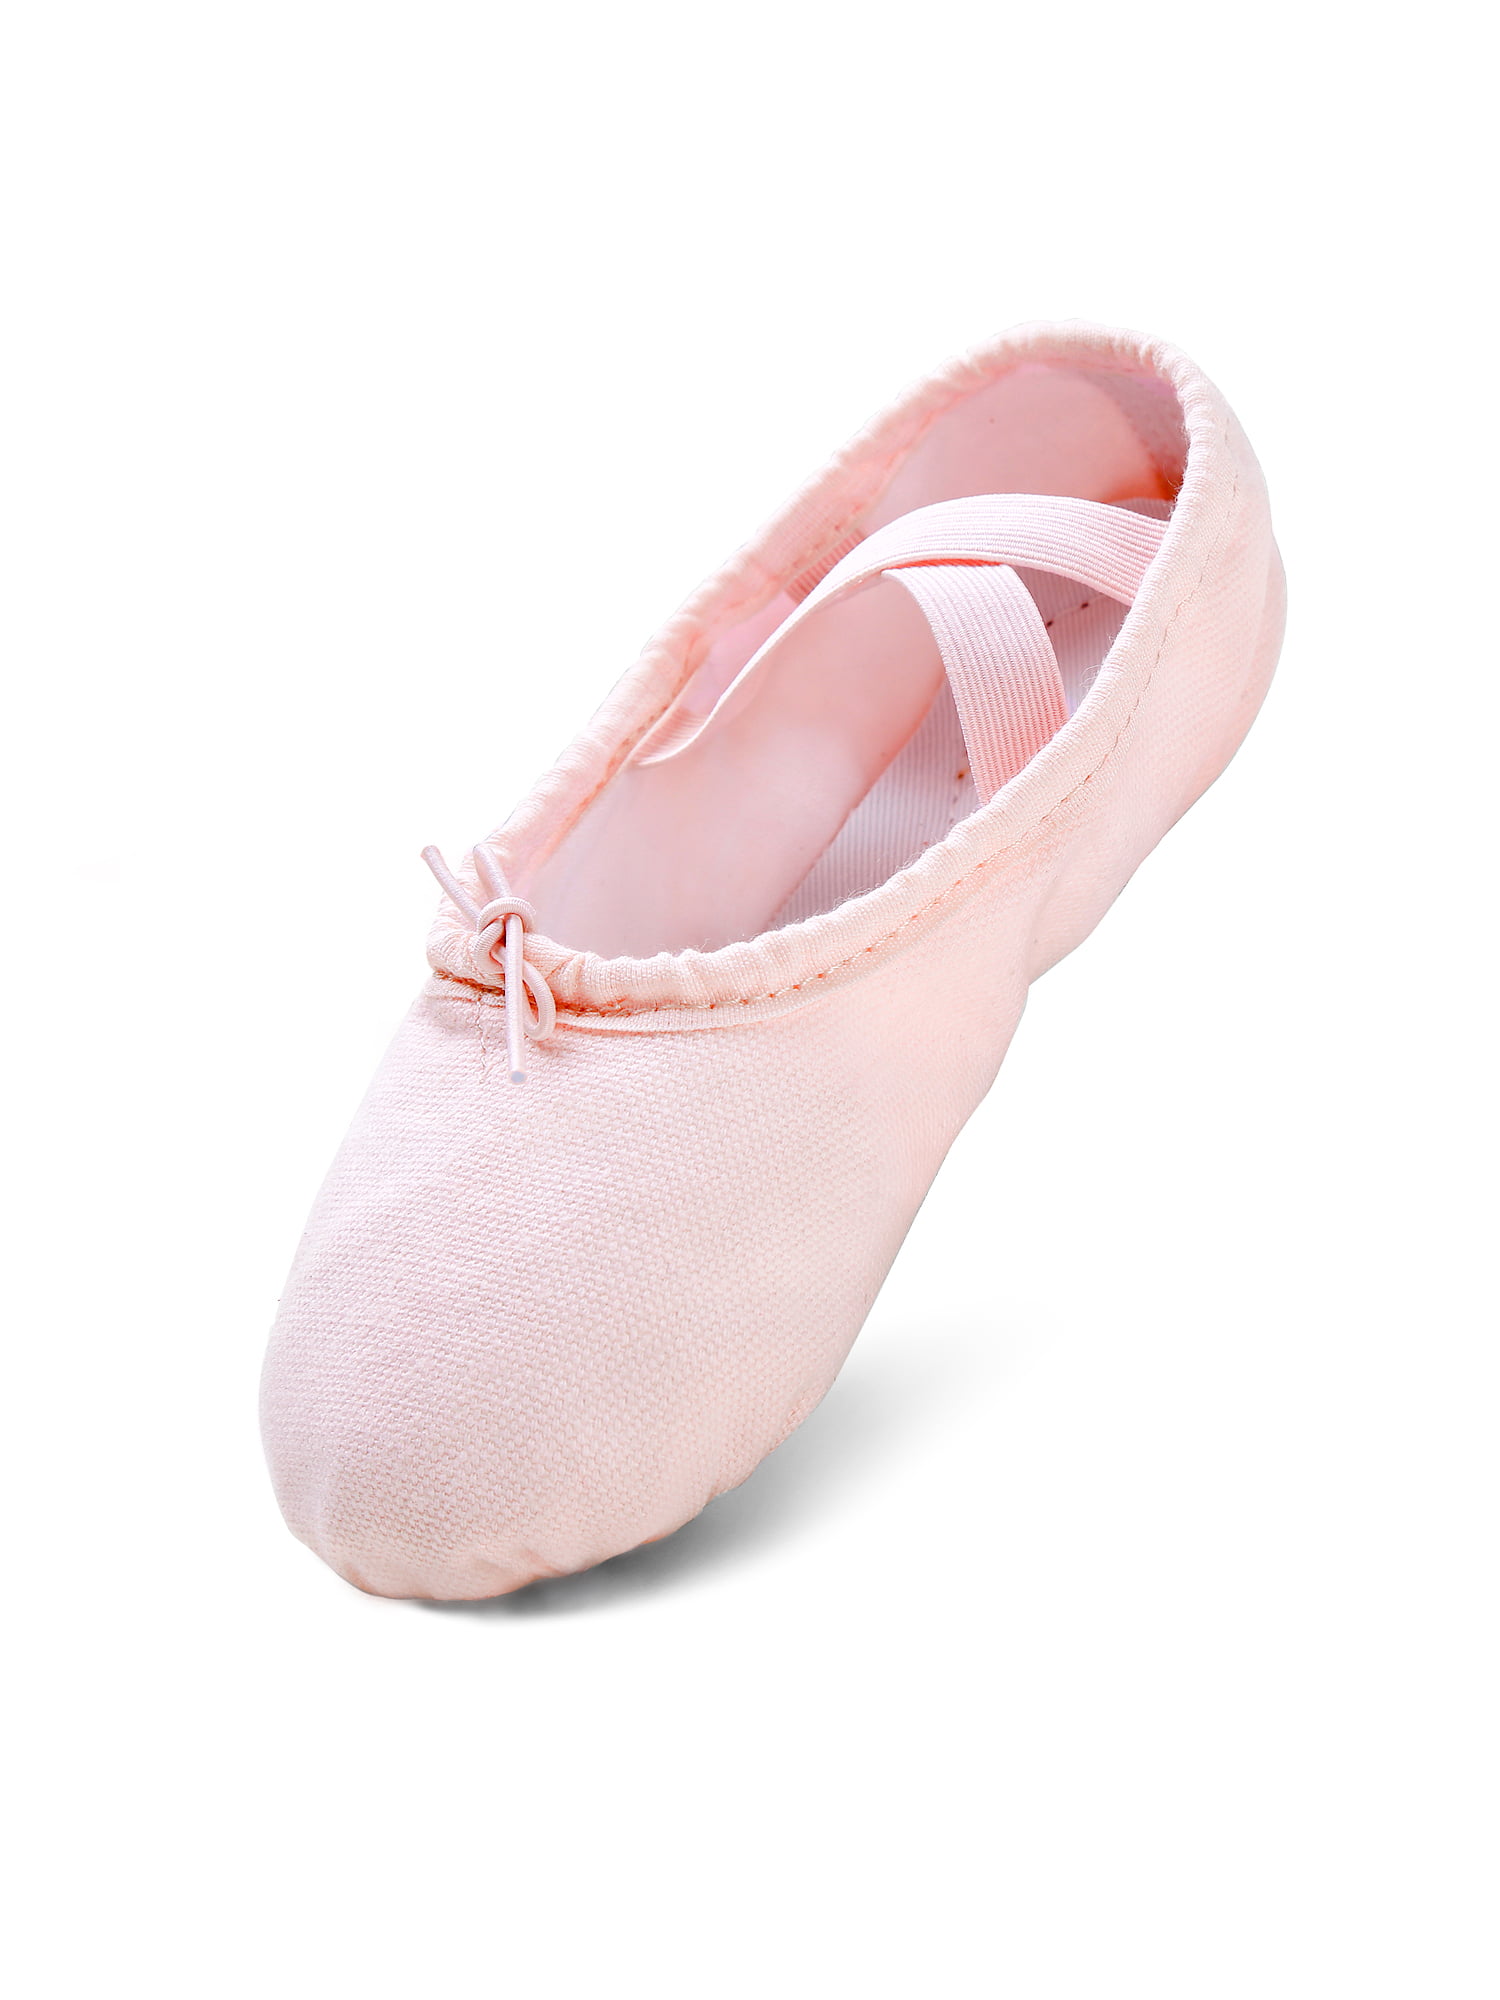 Premium KK Boy's Girl's Pumps School,Gym Textile slippers Home shoes -Indoors 